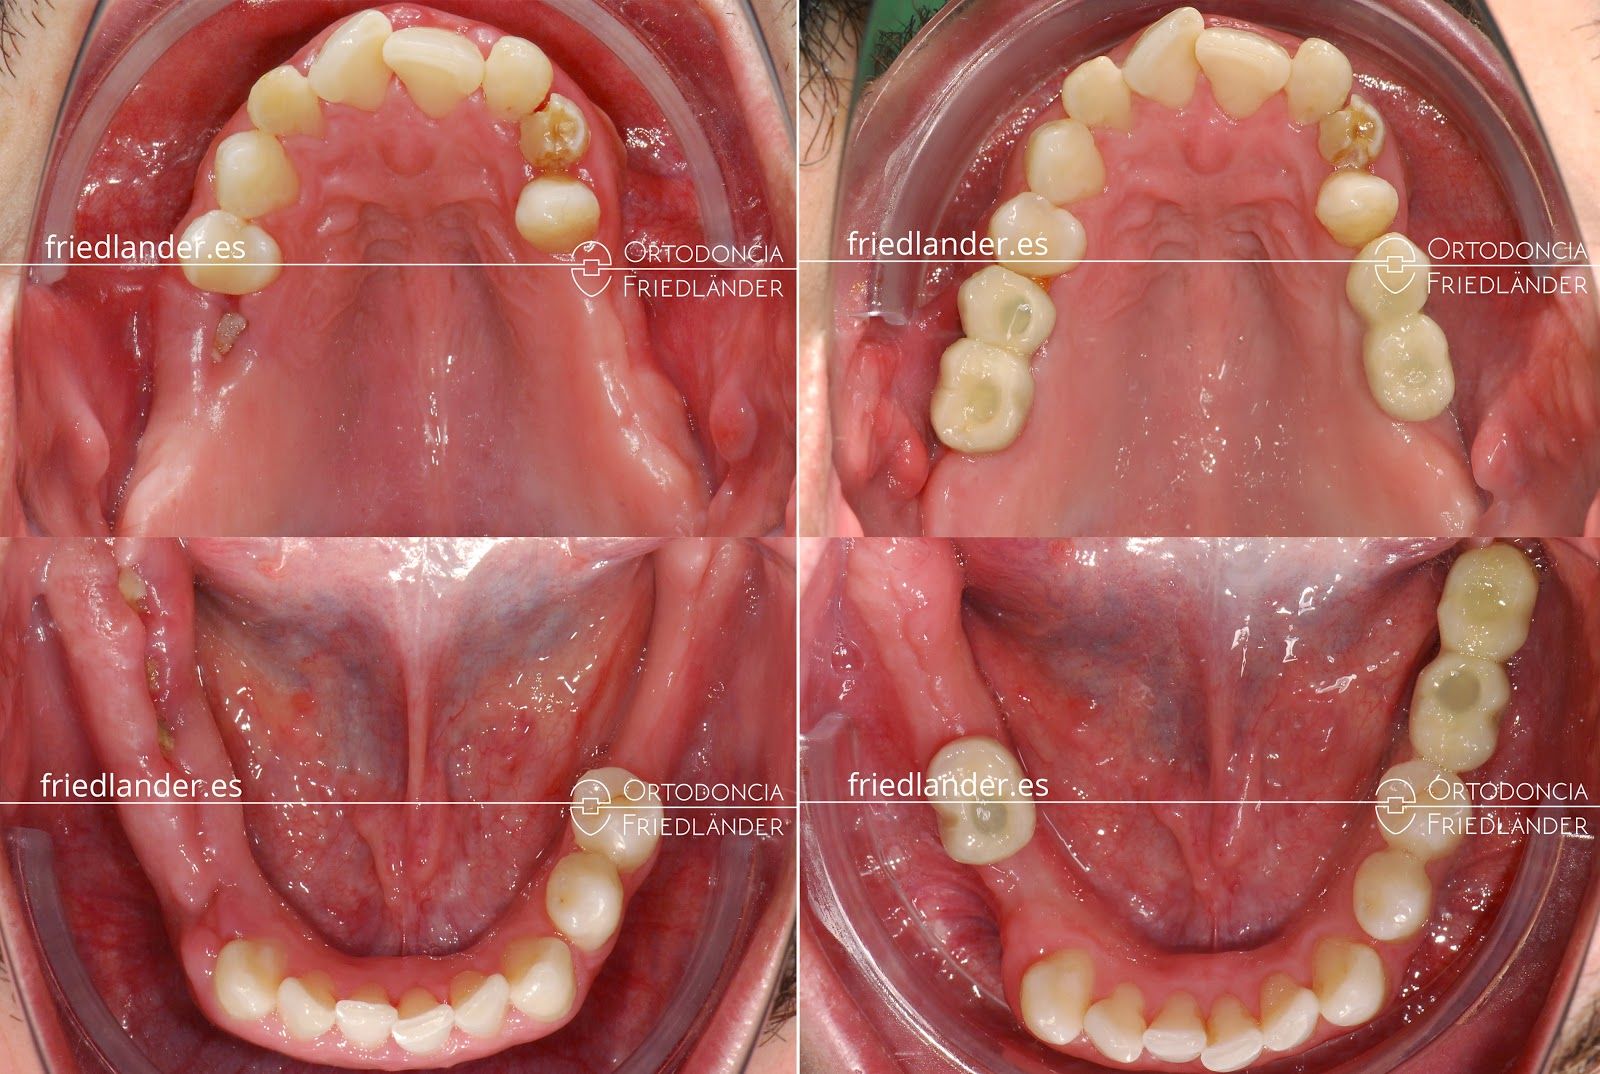 implante ortodoncia foto 2